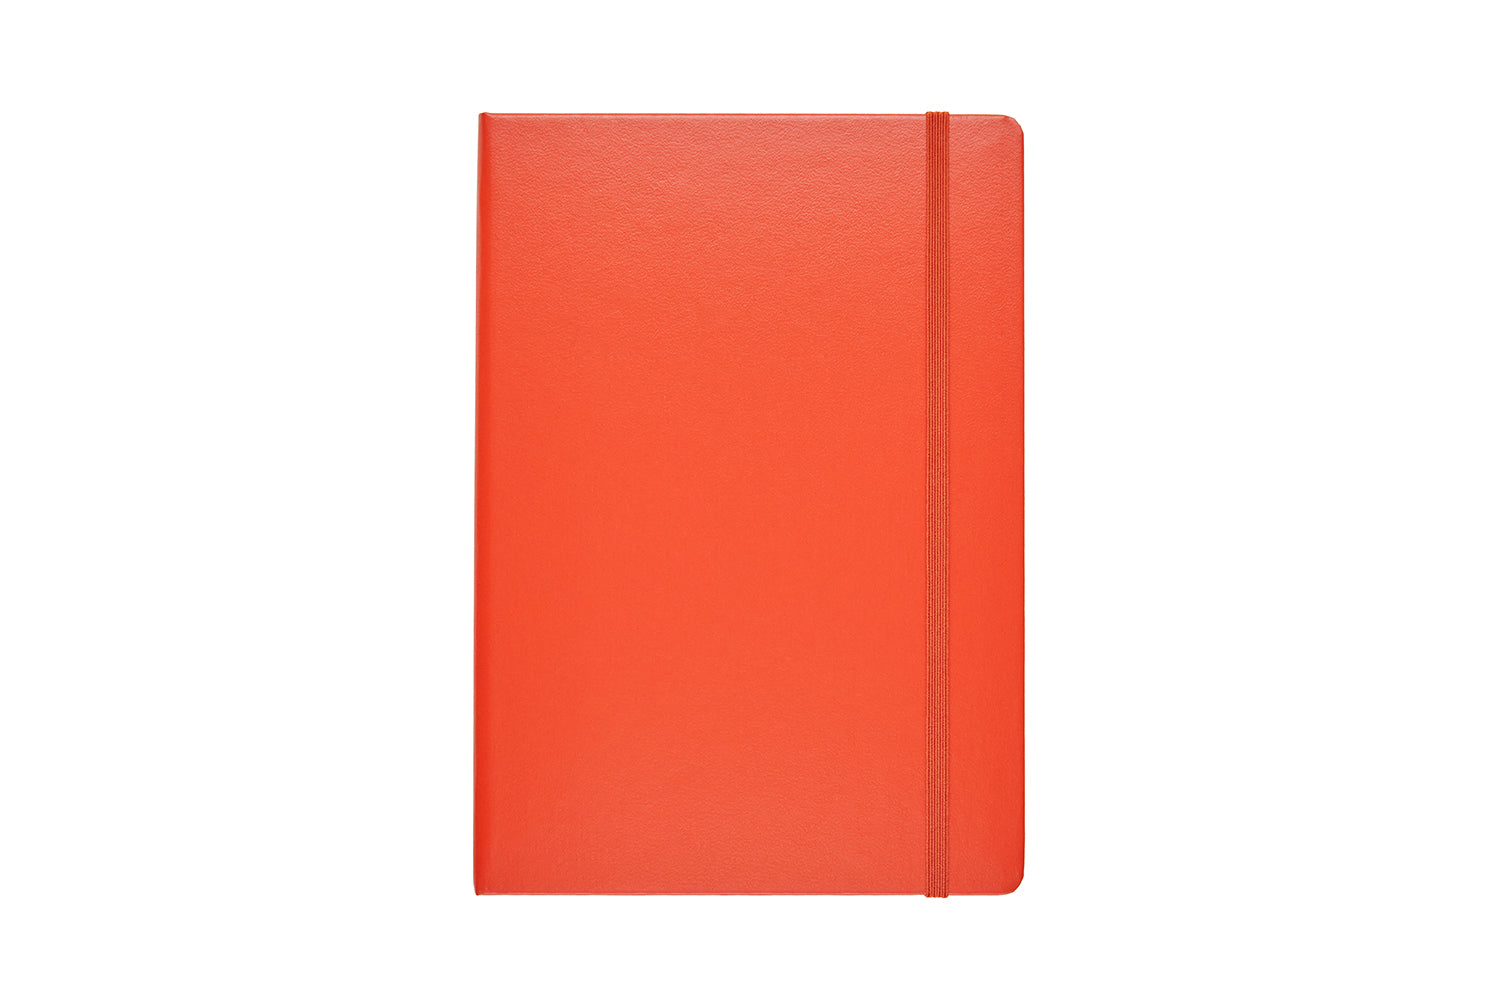 Leuchtturm1917 Hardcover Notebook - Pocket (A6) - Black - Dotted